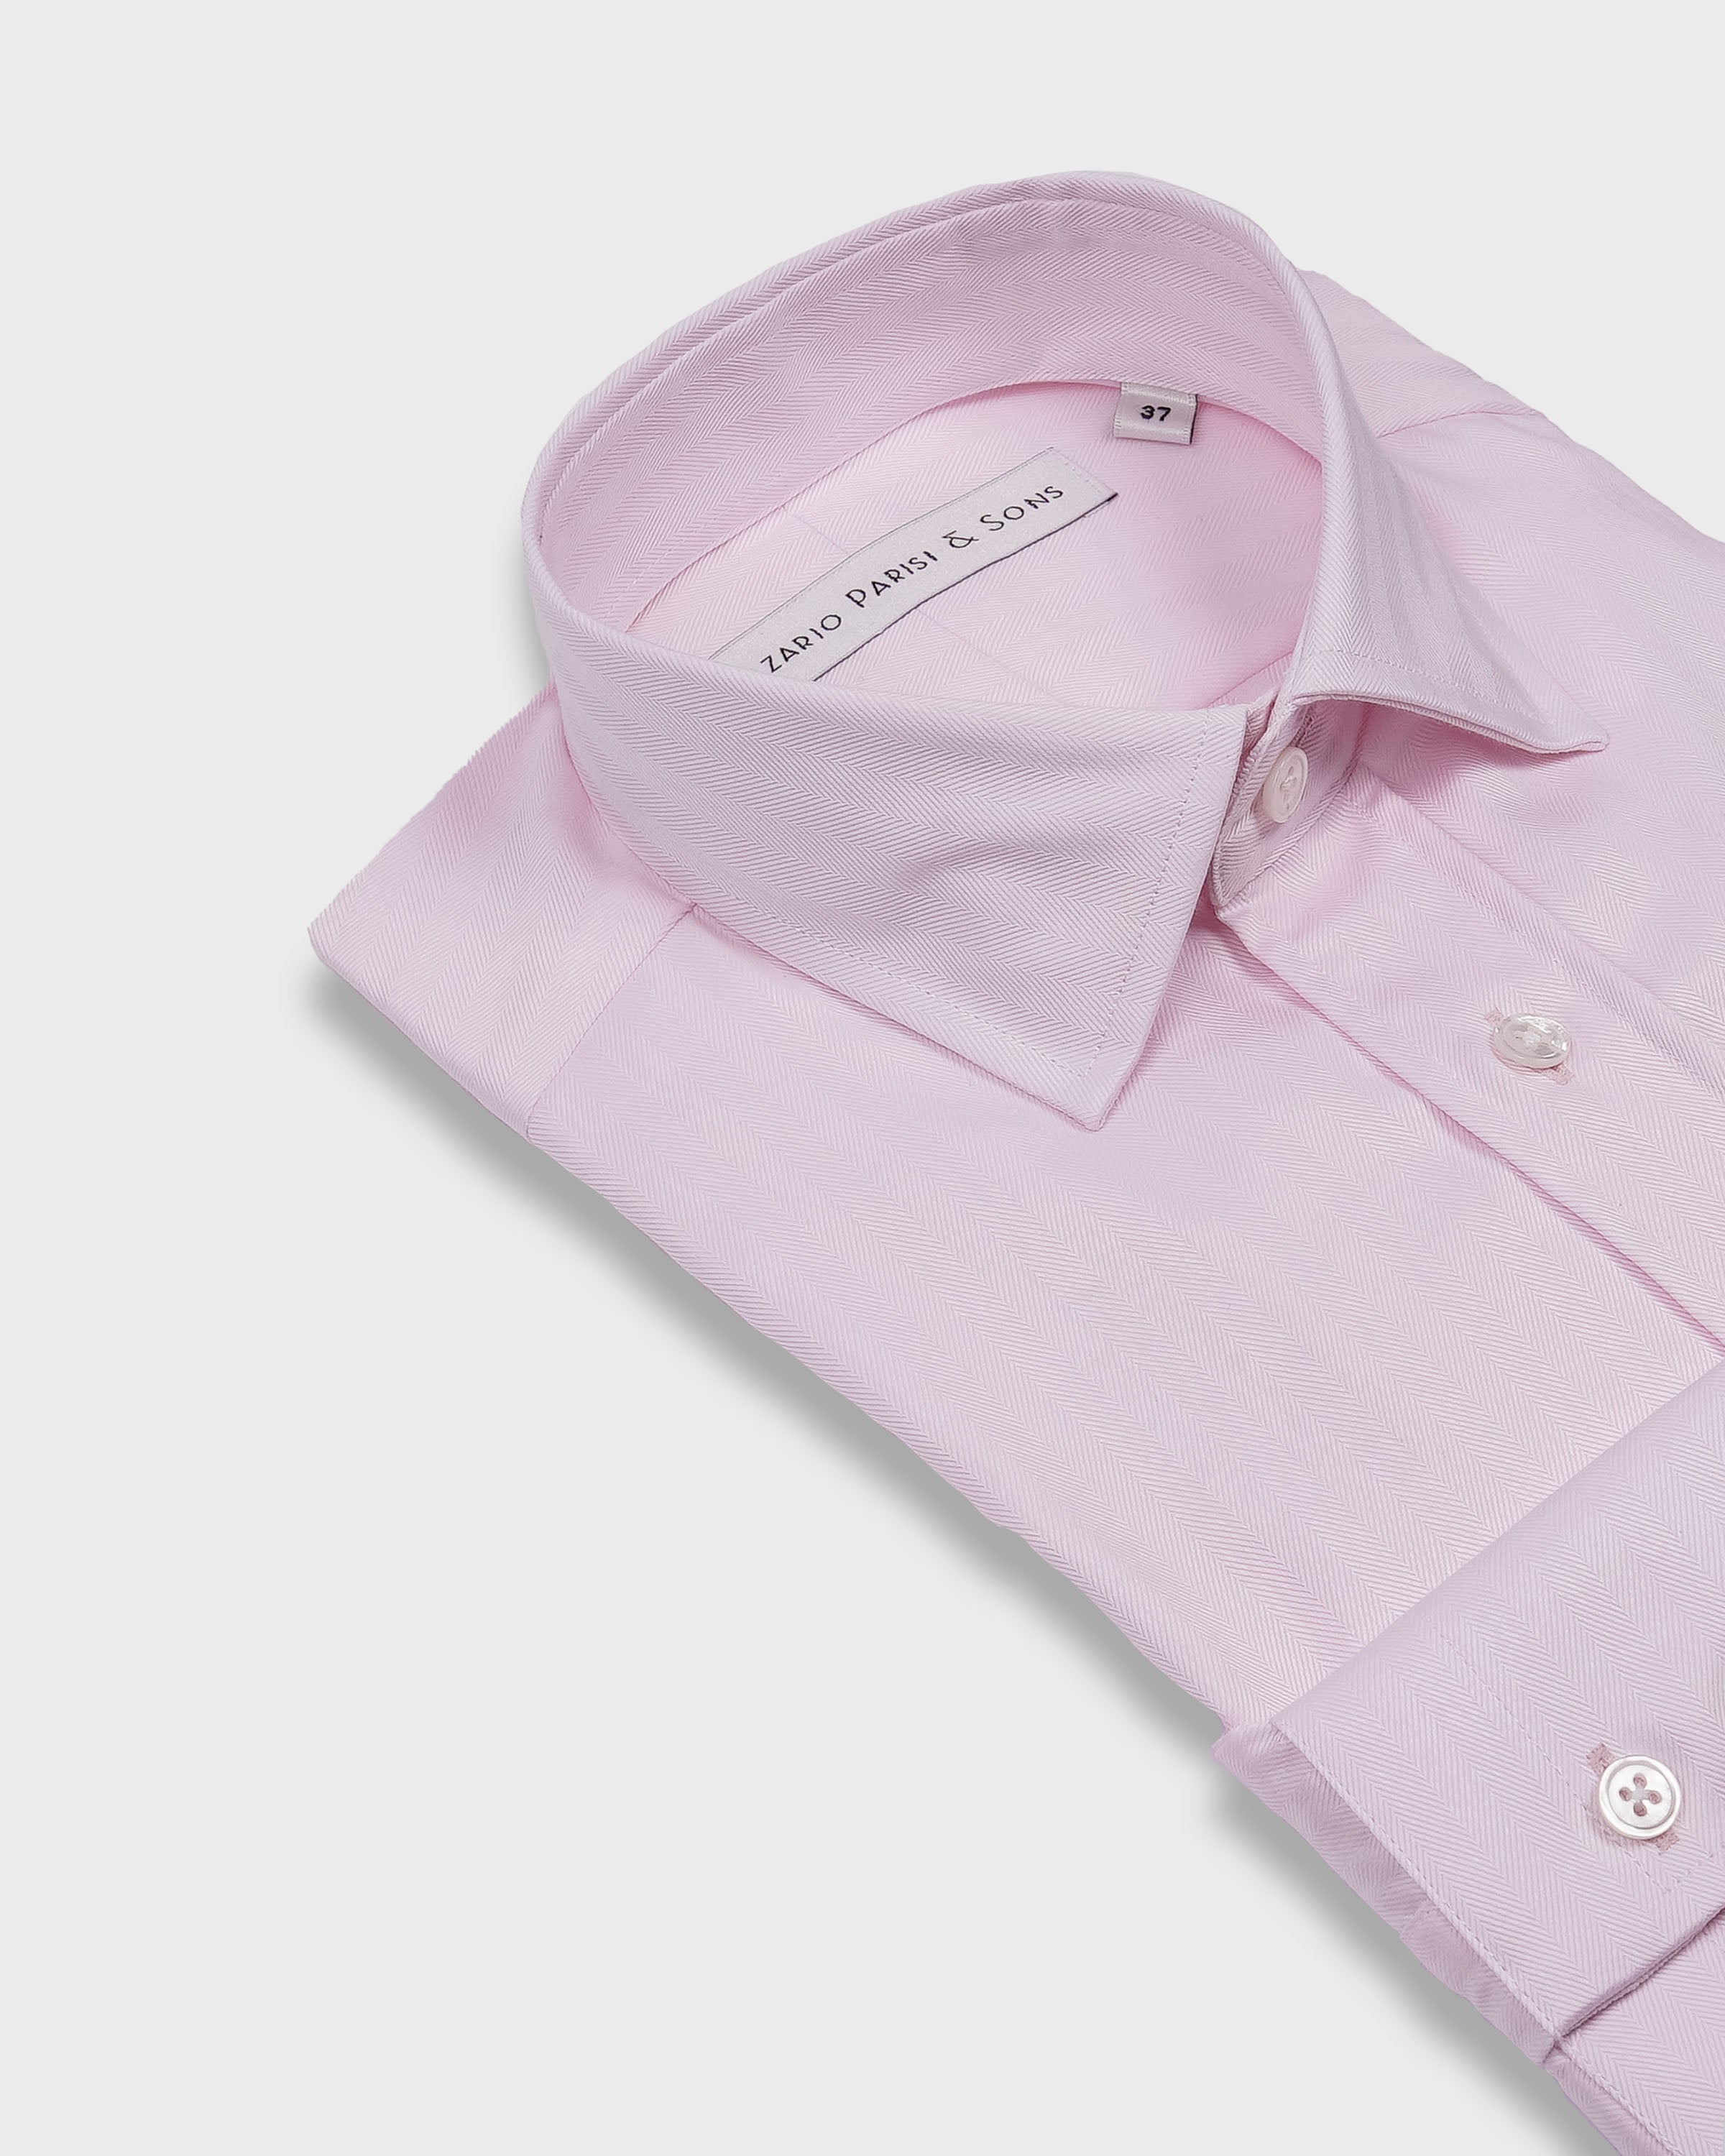 New York Pink Shirt